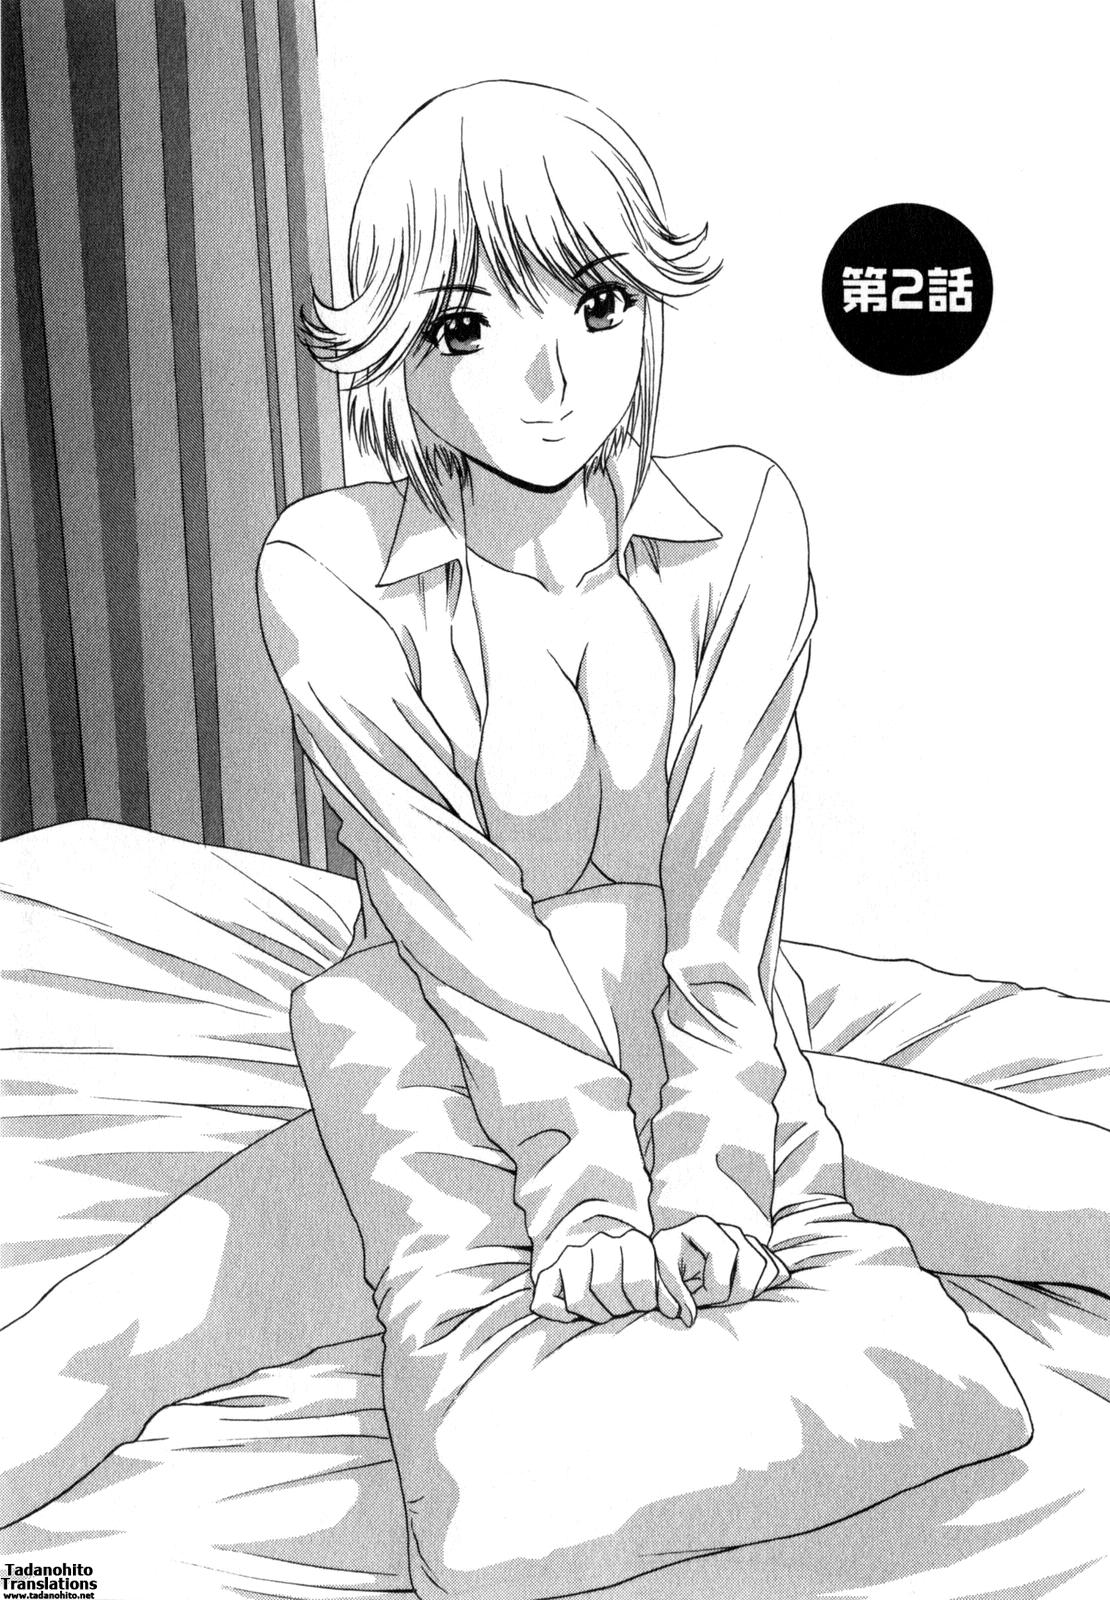 [Hidemaru] Life with Married Women Just Like a Manga 1 - Ch. 1-4 [English] {Tadanohito} 26